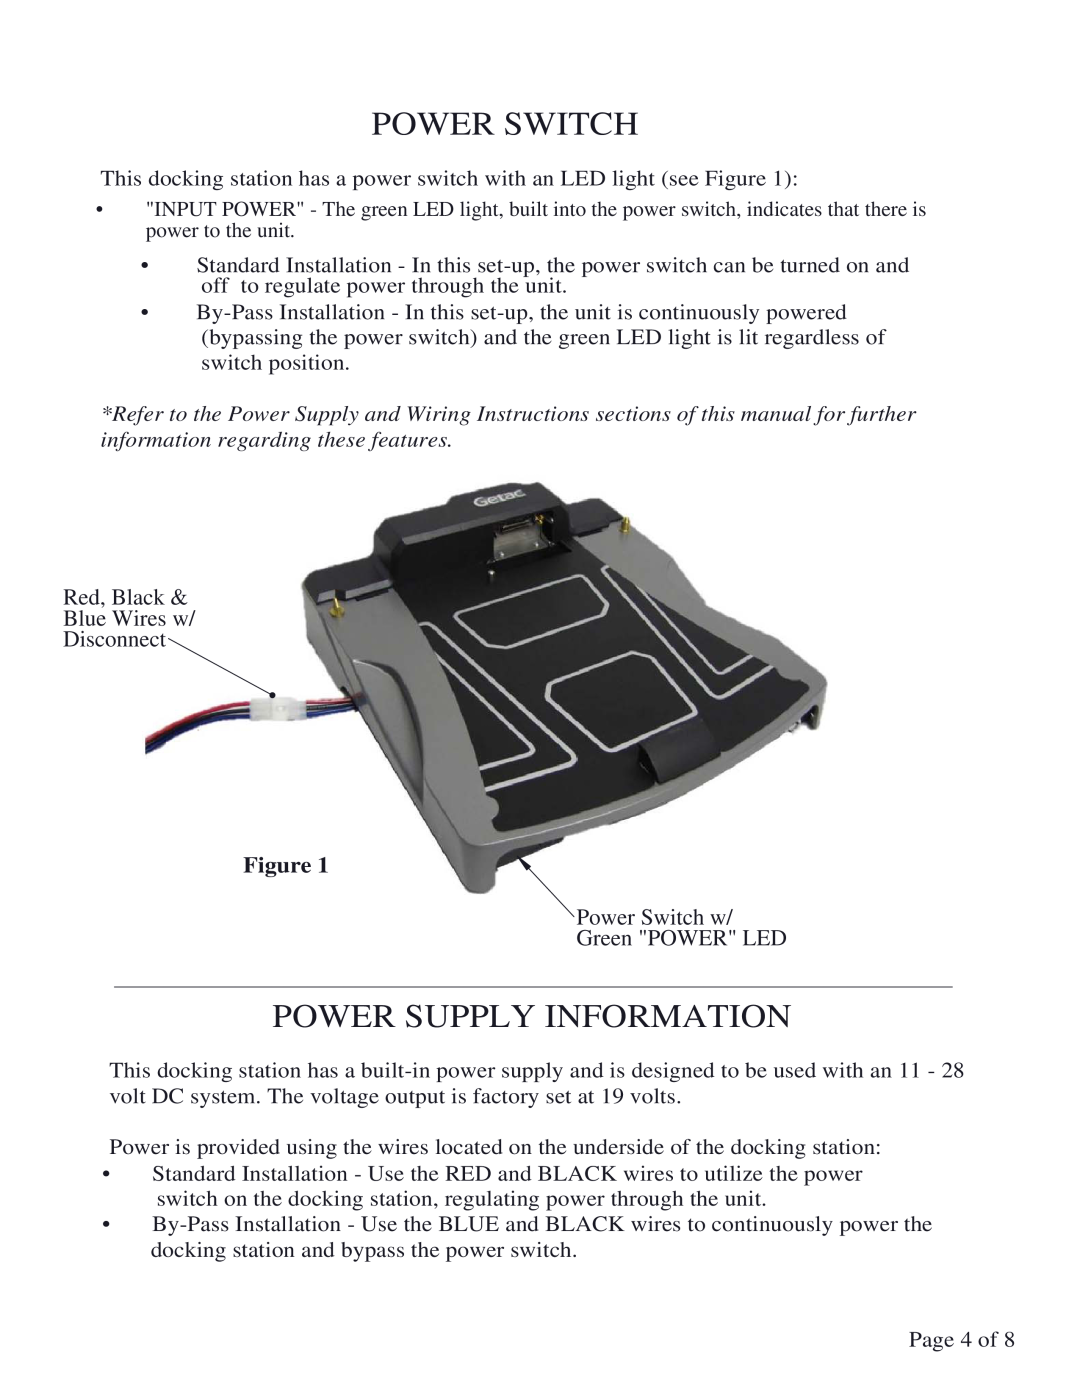 Gamber Johnson 7160-0526-02, 7160-0526-00 installation instructions Power Switch, Power Supply Information 